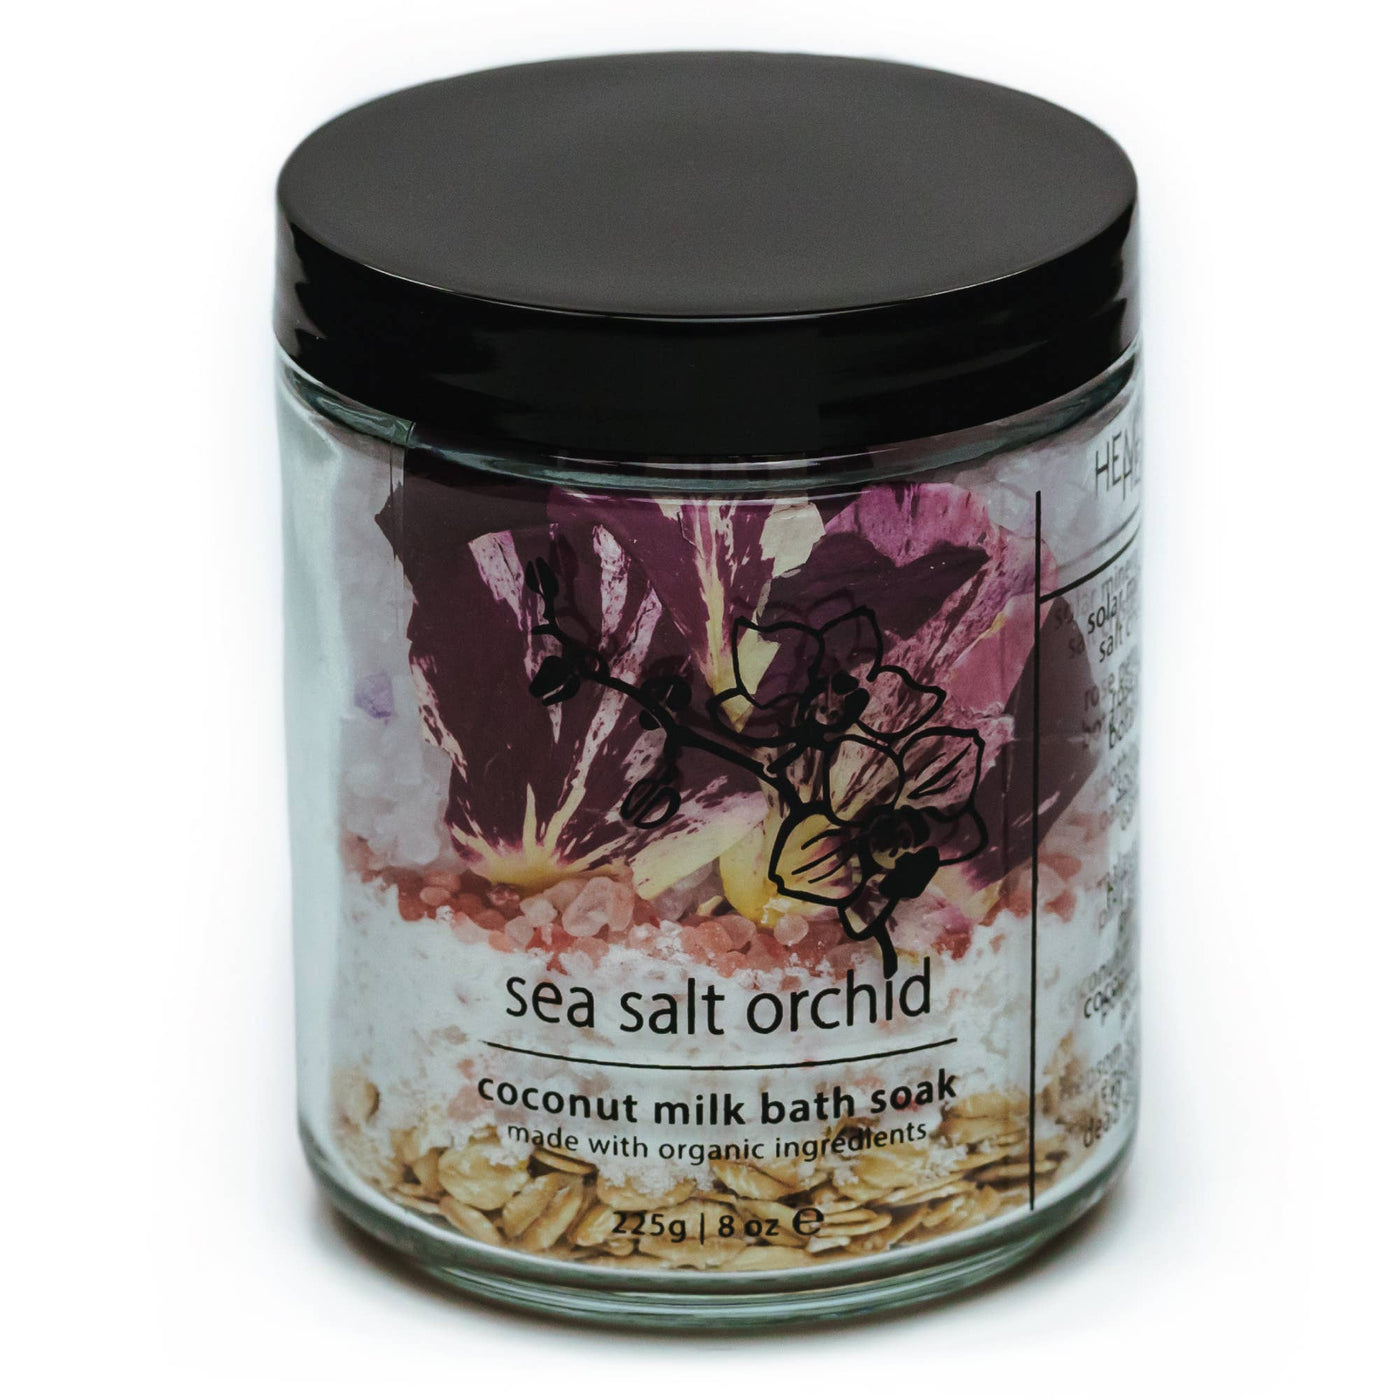 Coconut Milk Bath Soak: Sea Salt Orchid